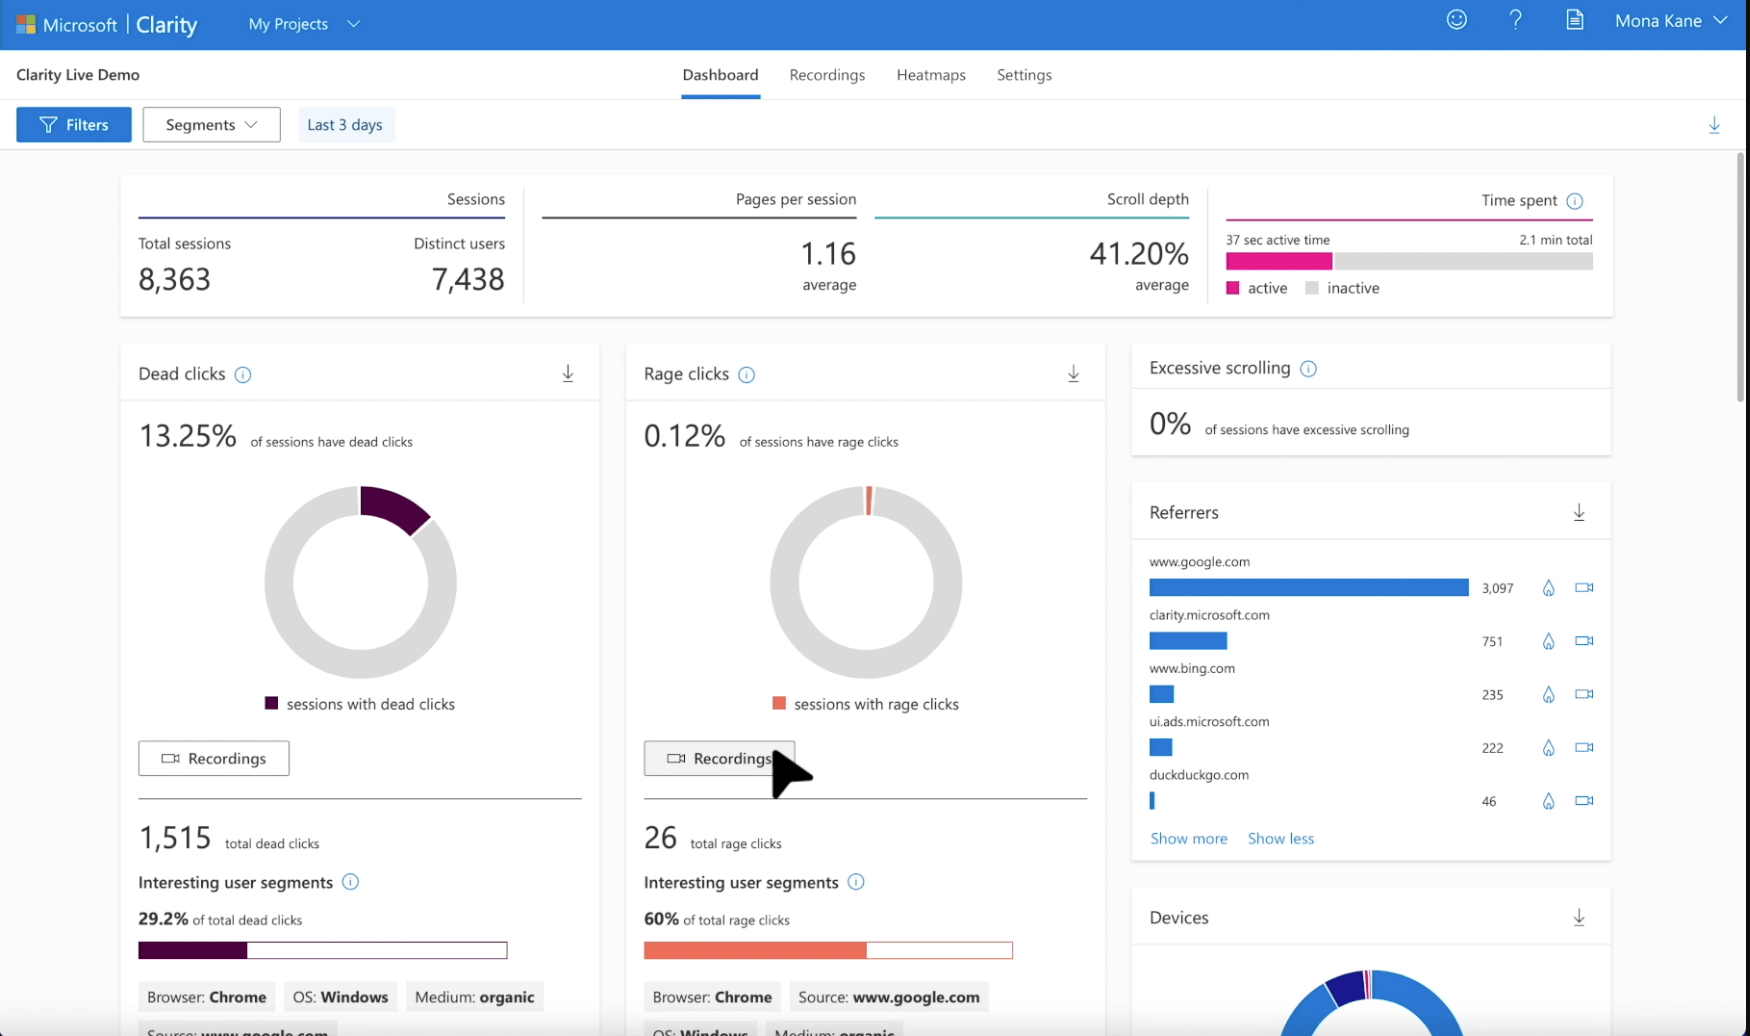 A screenshot of the Microsoft clarity analytics dashboard